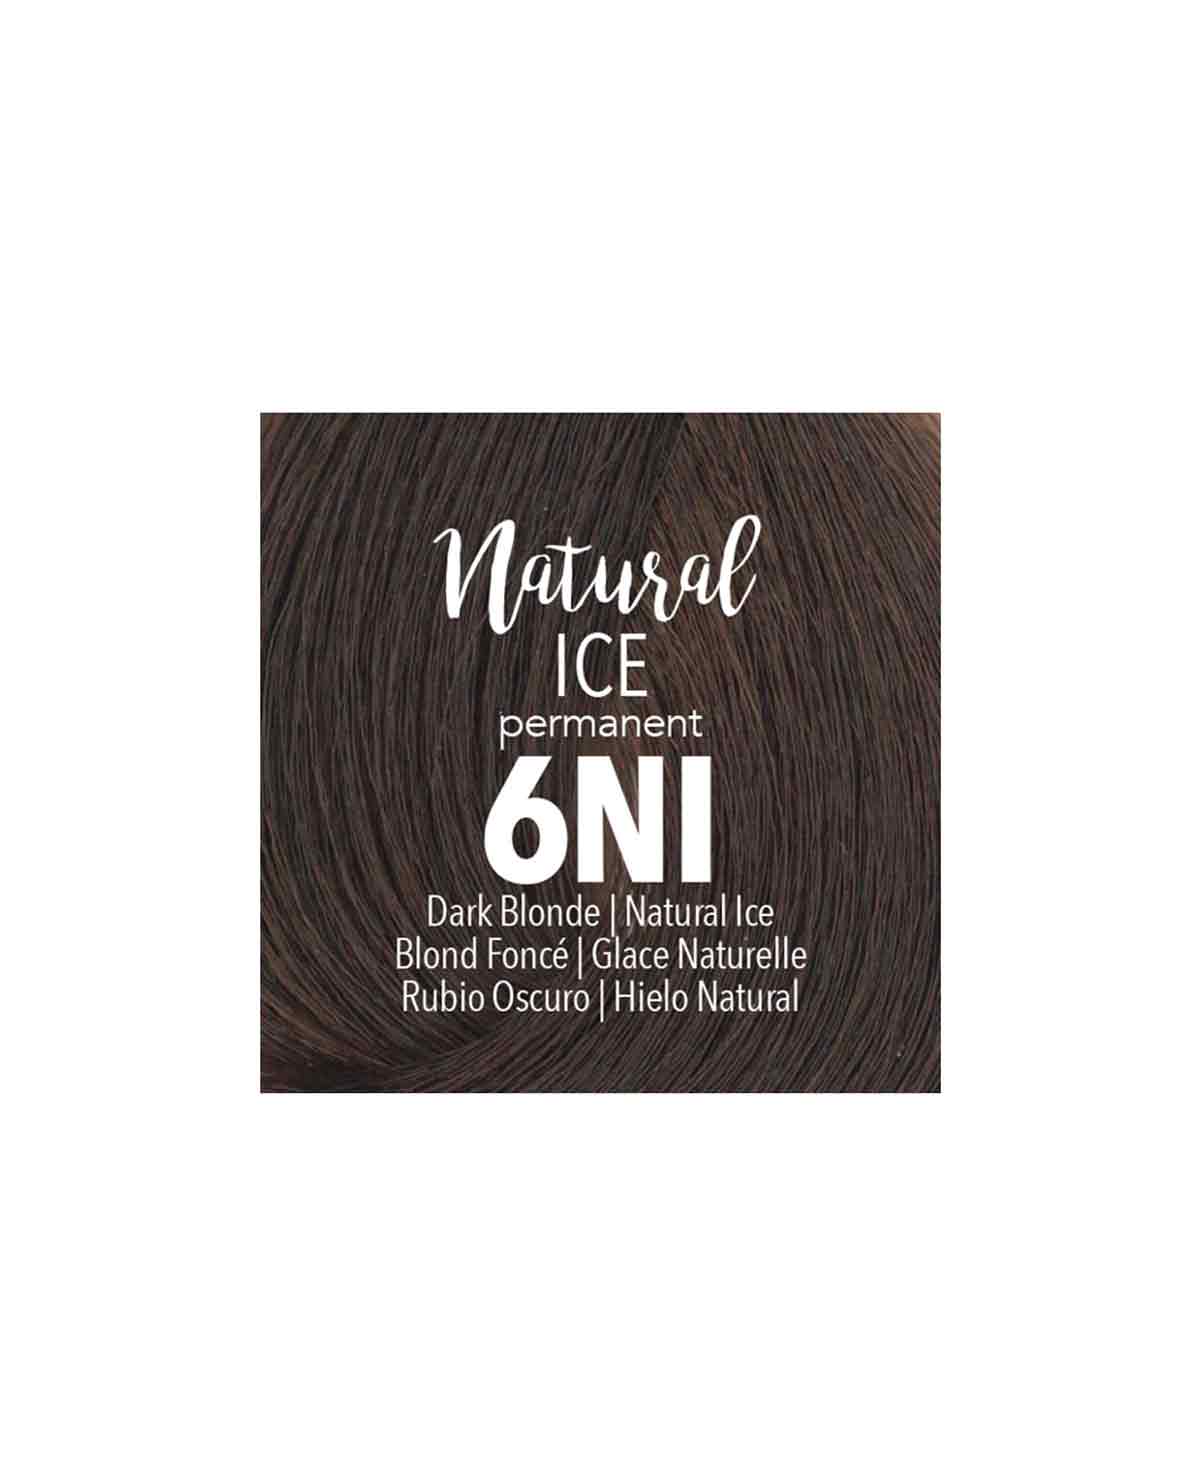 Mydentity - 6NI Dark Blonde Natural Ice